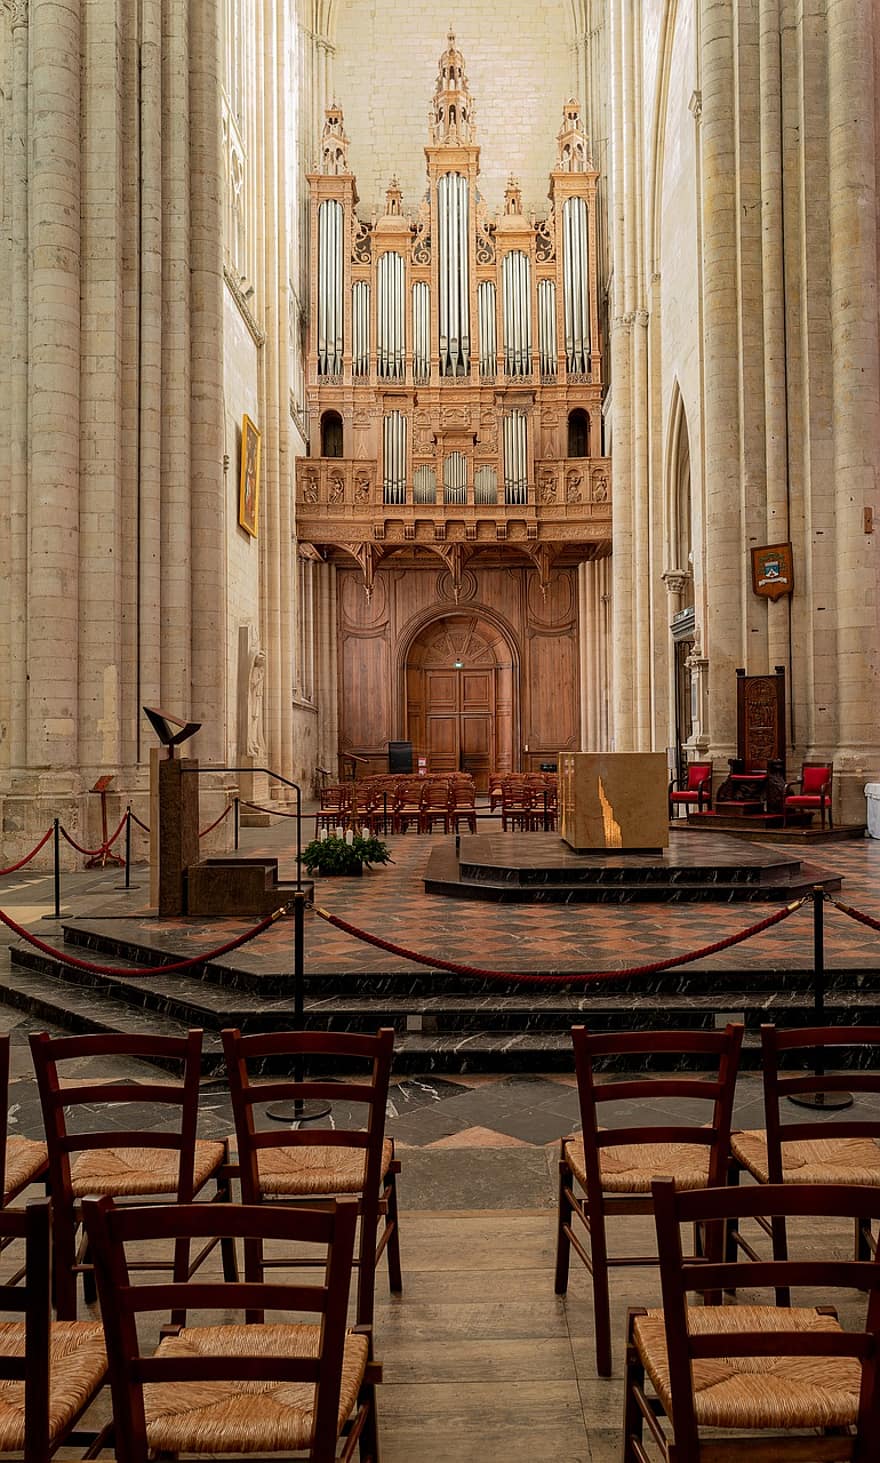 organ, katedra, wnętrze, Katedra Le Mans, le mans, Francja, krzesła, architektura, historyczny